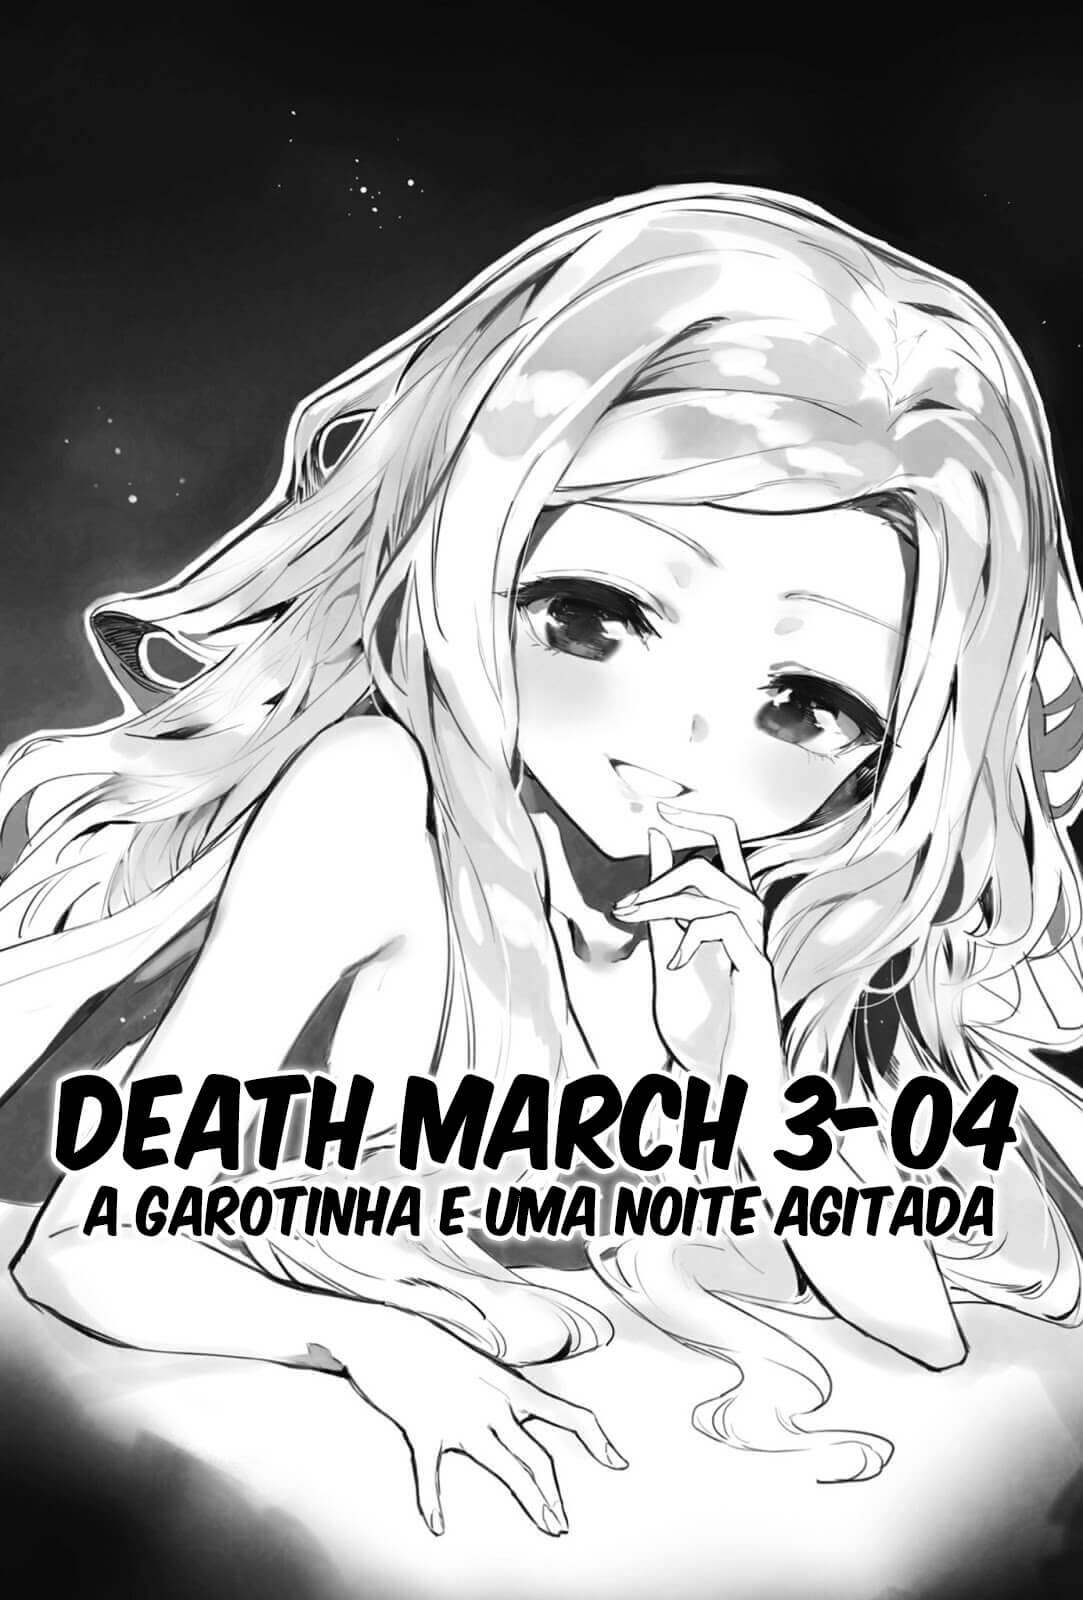 Death March Kara Hajimaru Isekai Kyousoukyoku / Death Marching to the Parallel World Rhapsody Web Novel Online Ilustração Capítulo 3-04